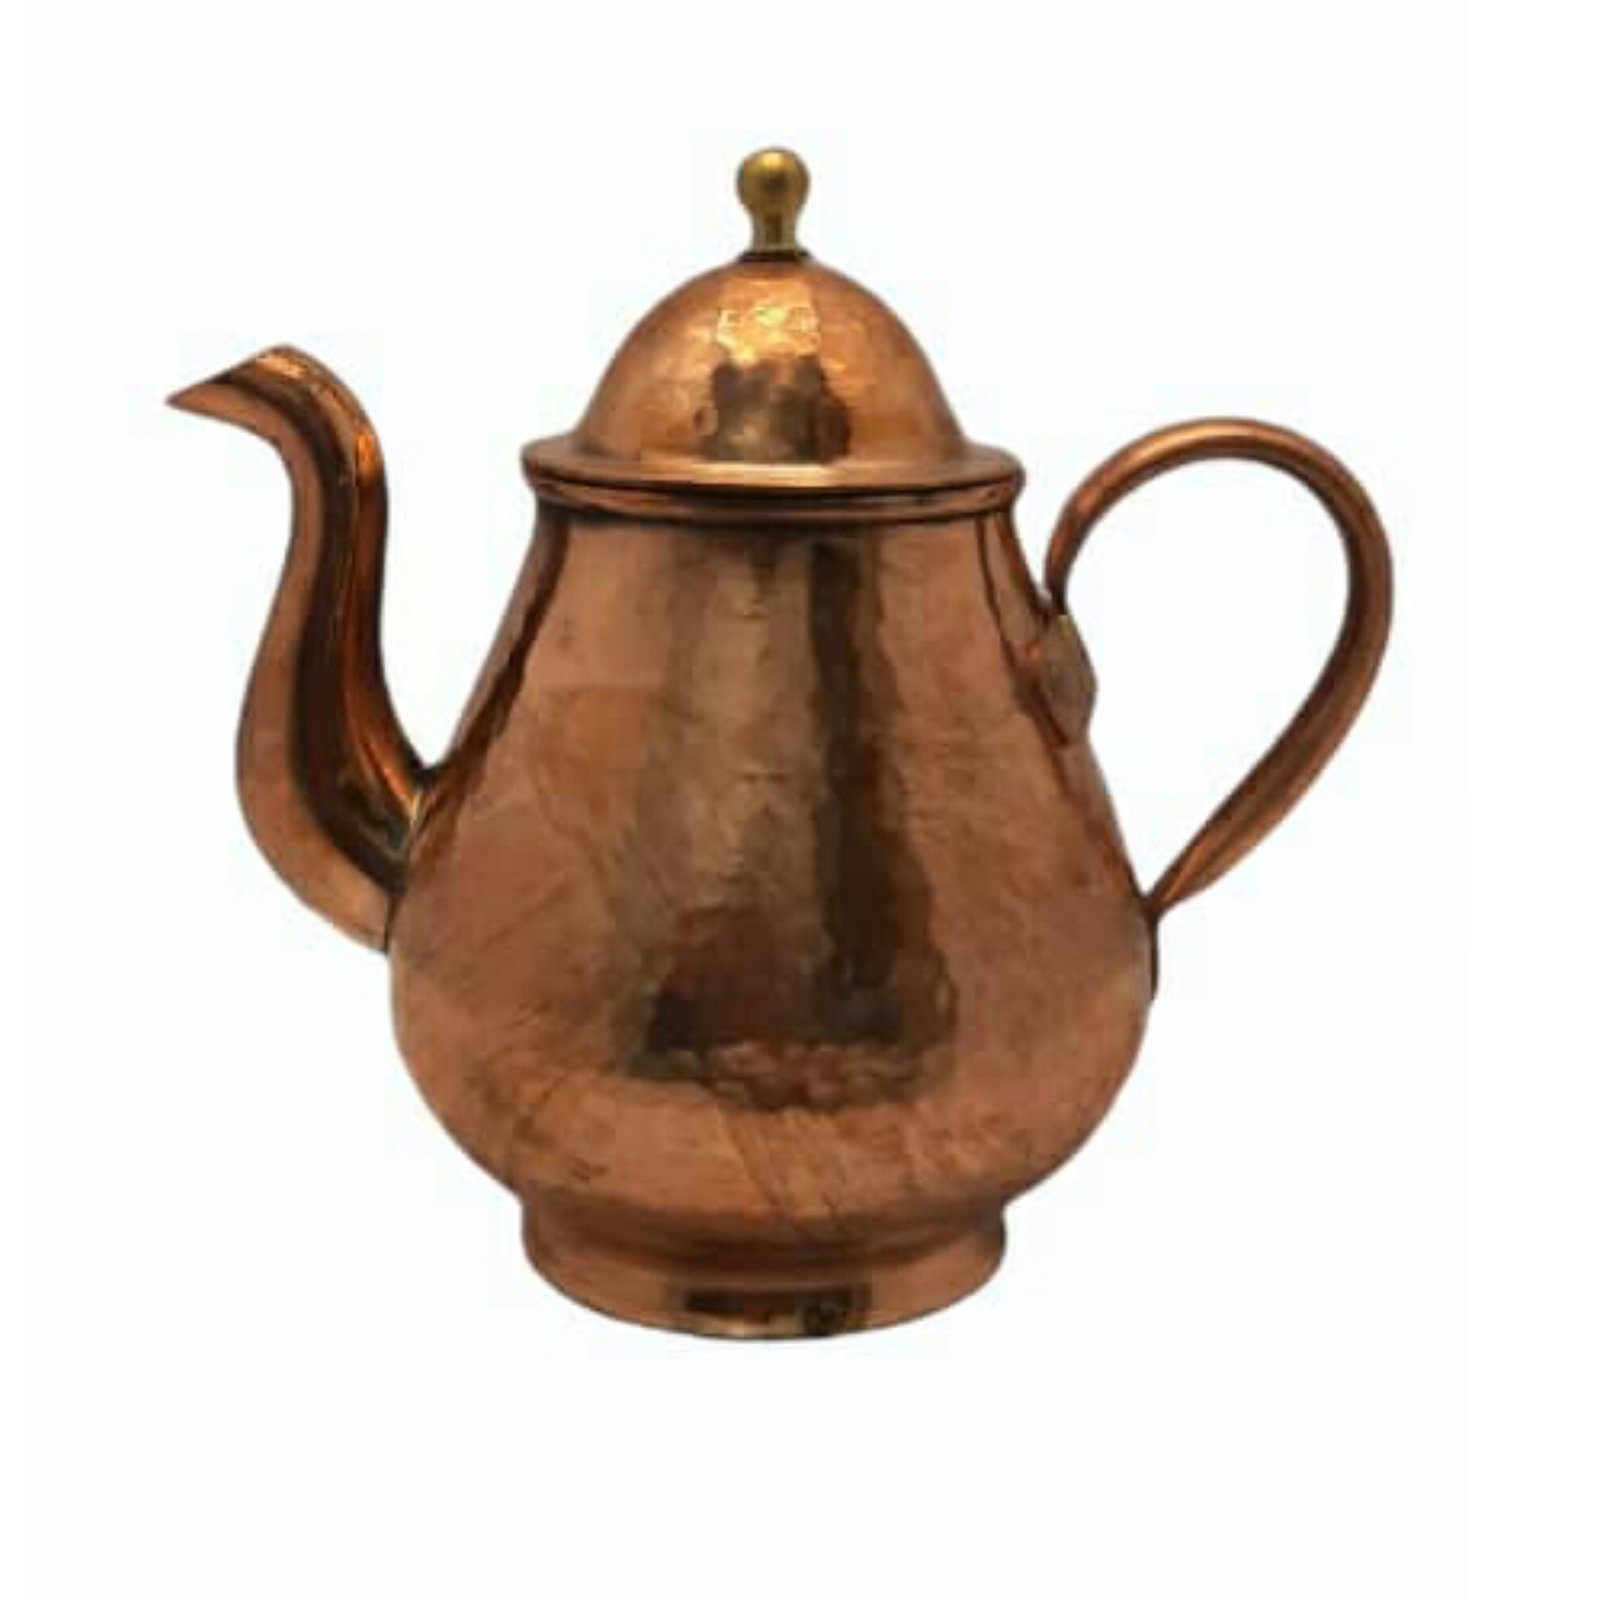 Handicraft Copper teapot model 1100,工艺品铜,铜工艺品,铜手工,铜餐具,铜壶,铜玻璃,铜勺